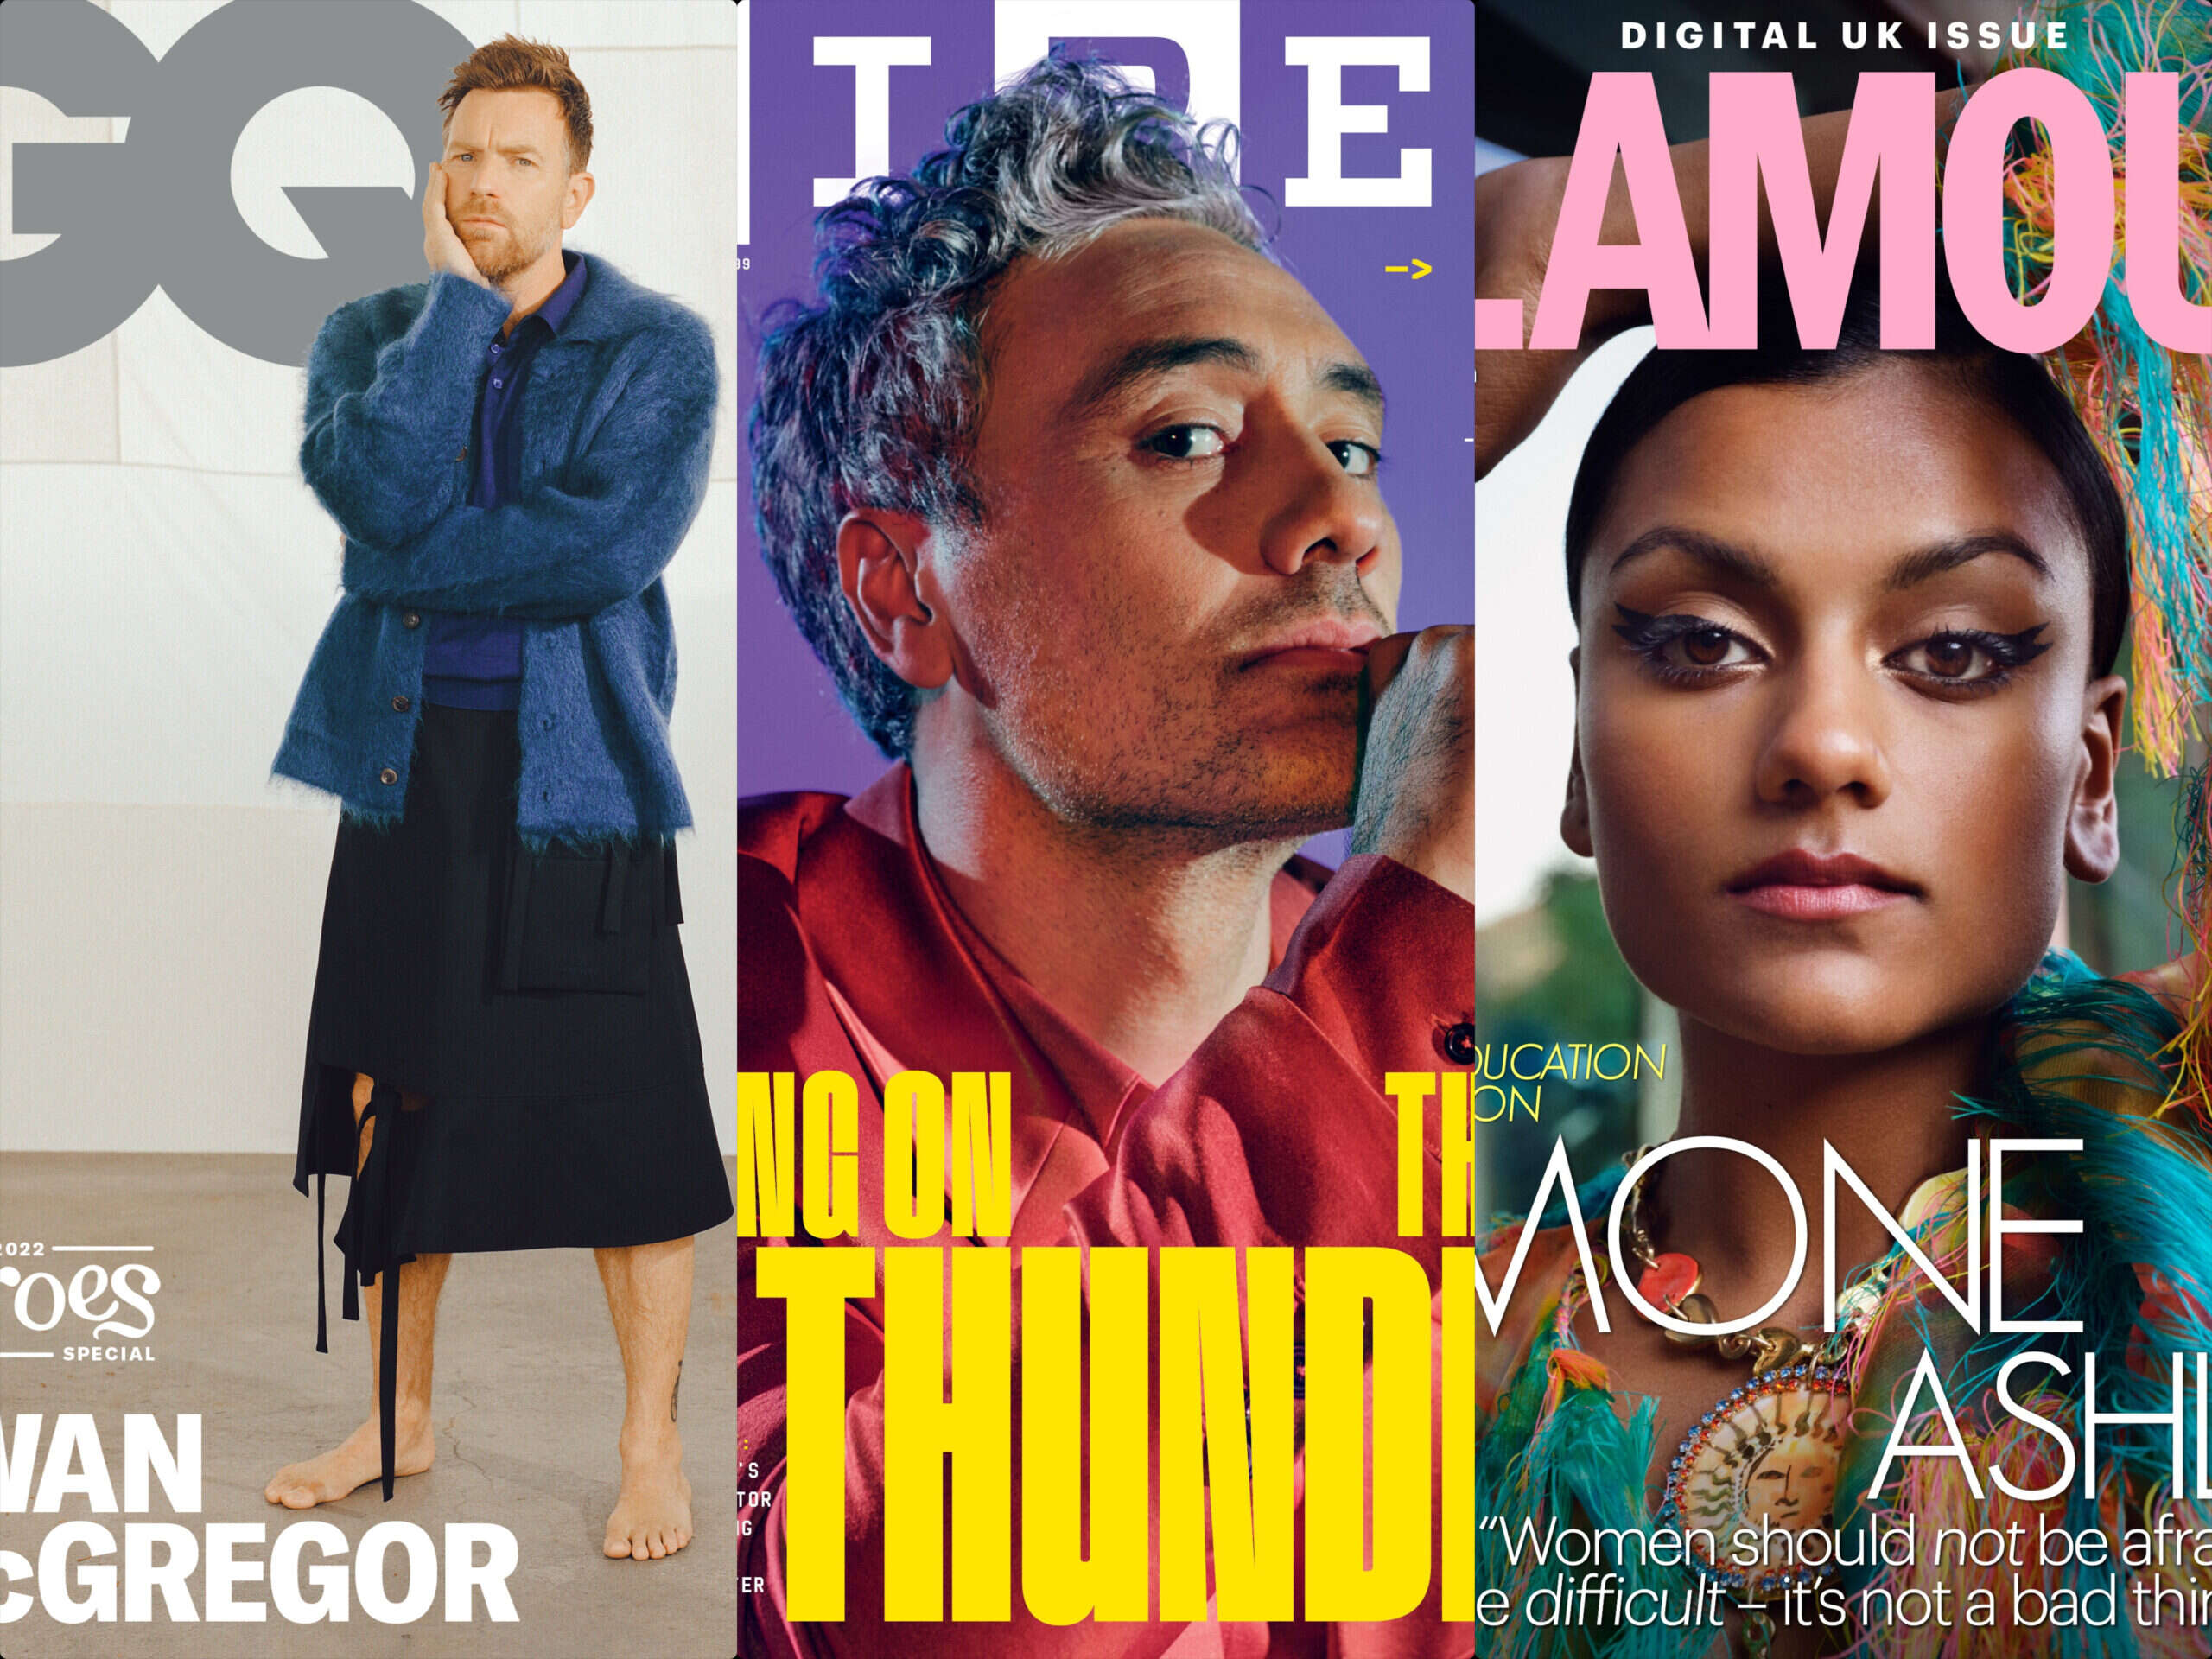 Condé Nast takes global gamble on future of magazines